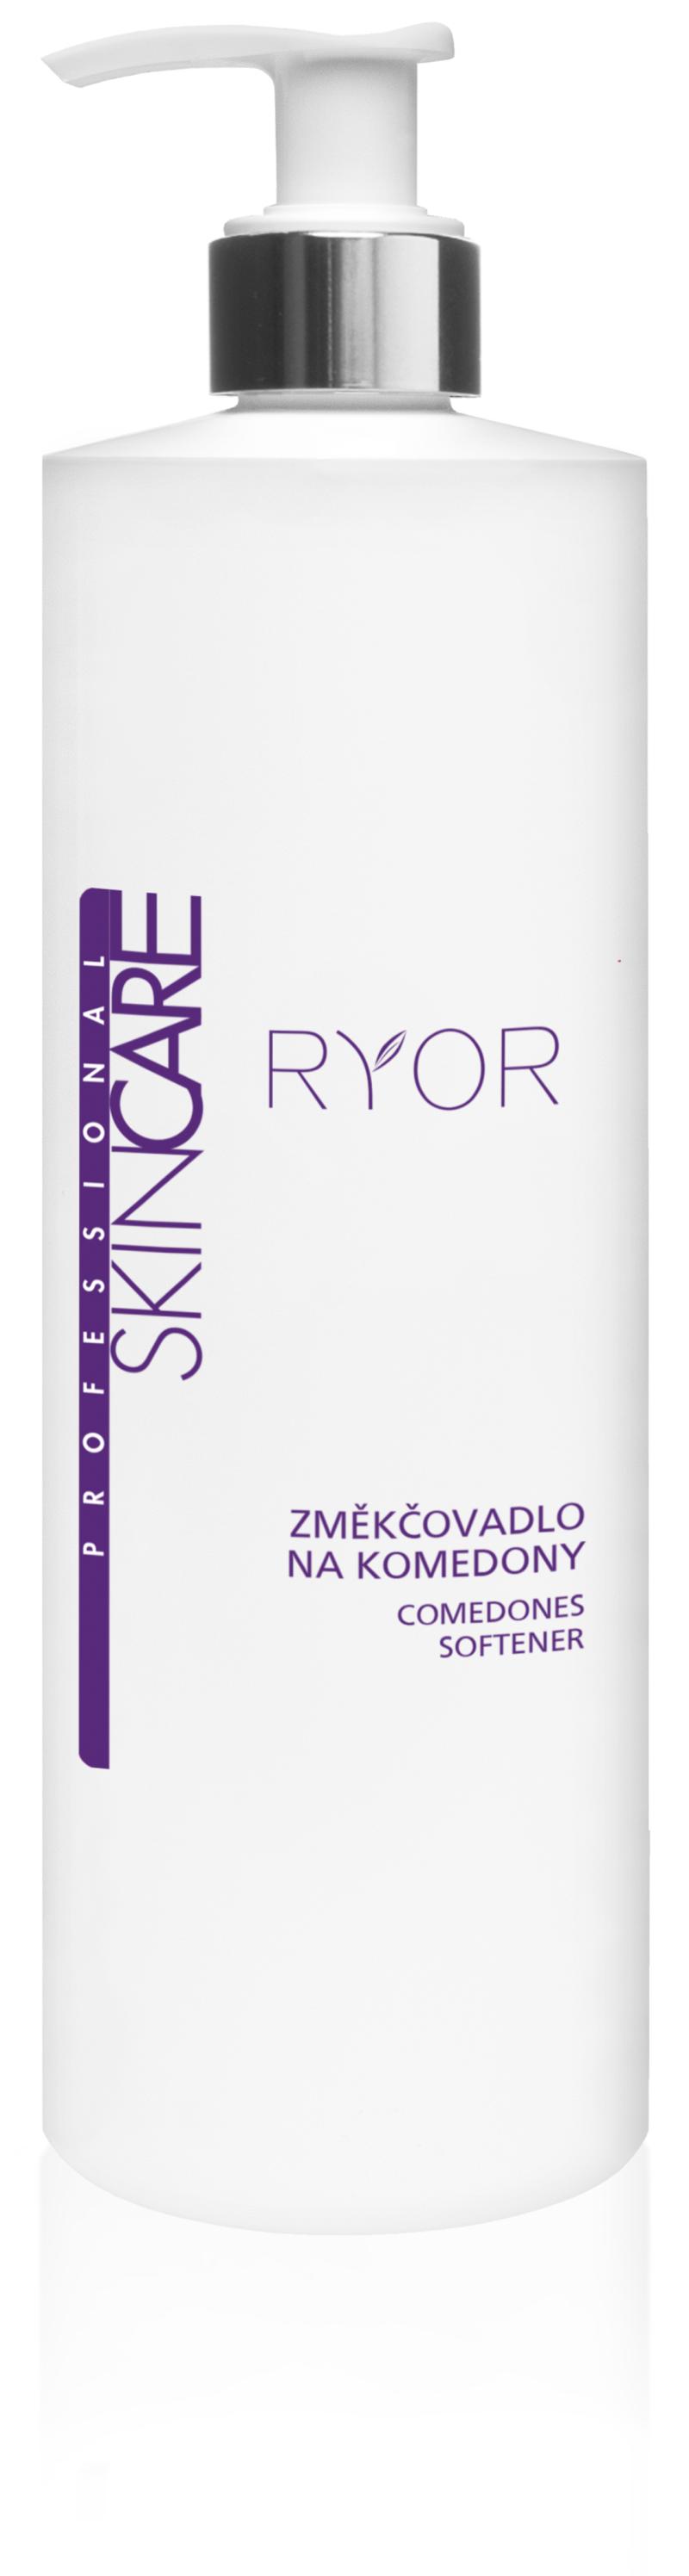 Ryor - Comedones softener (Skin softening, peeling)